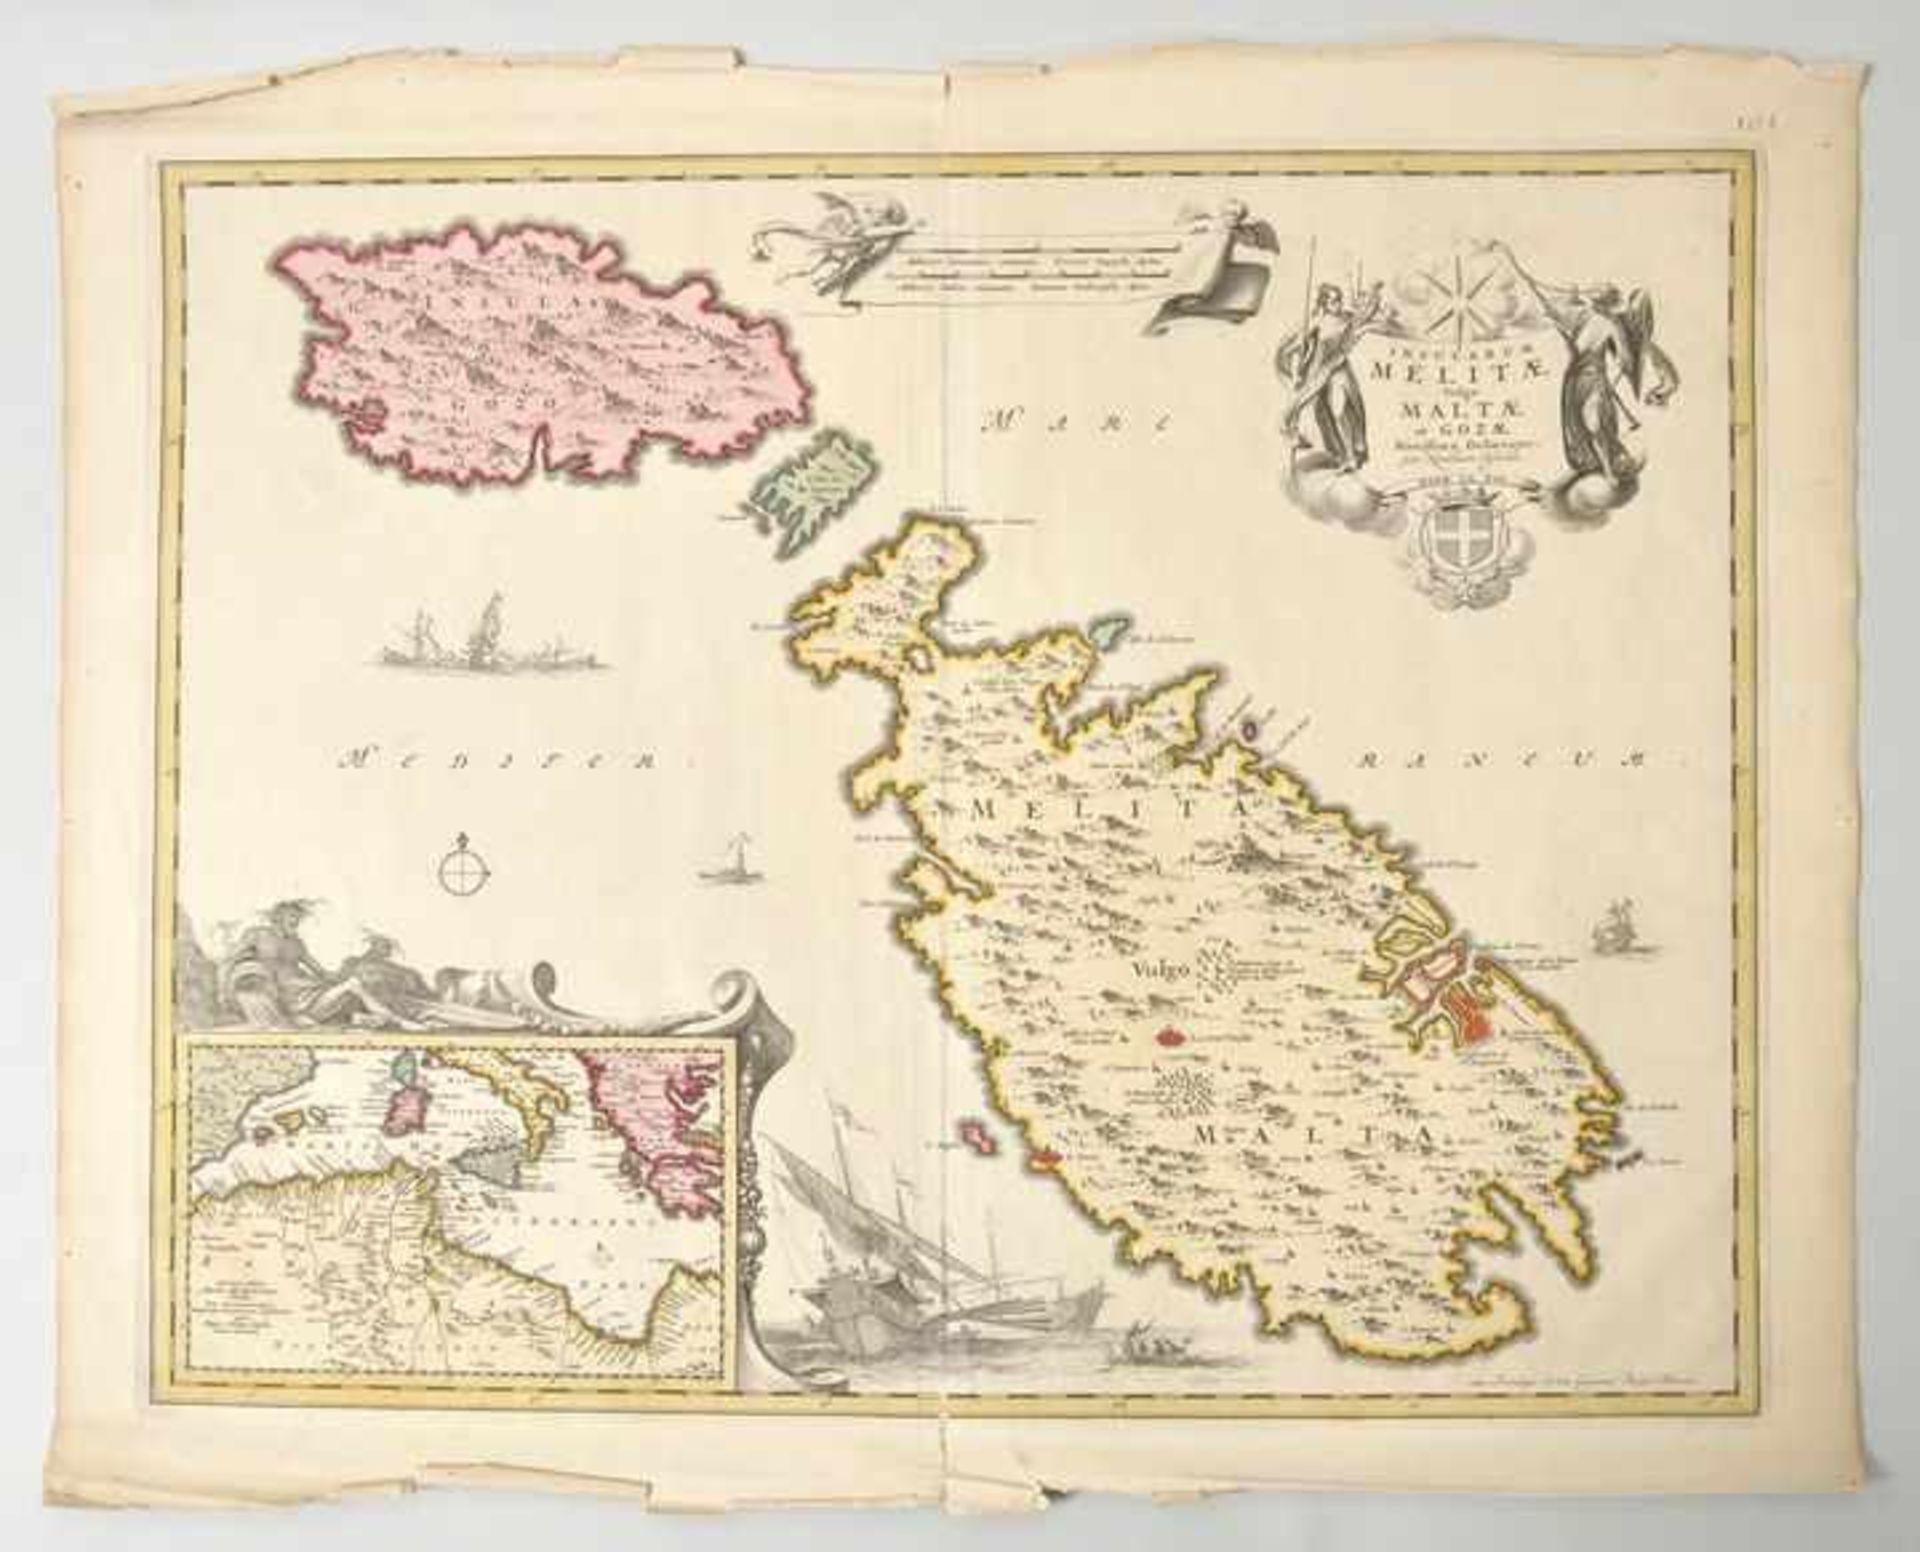 Karte der Mittelmeerinseln Malta und Gozo "Insularum Melitae vulgo Maltae et Gozae (...)",